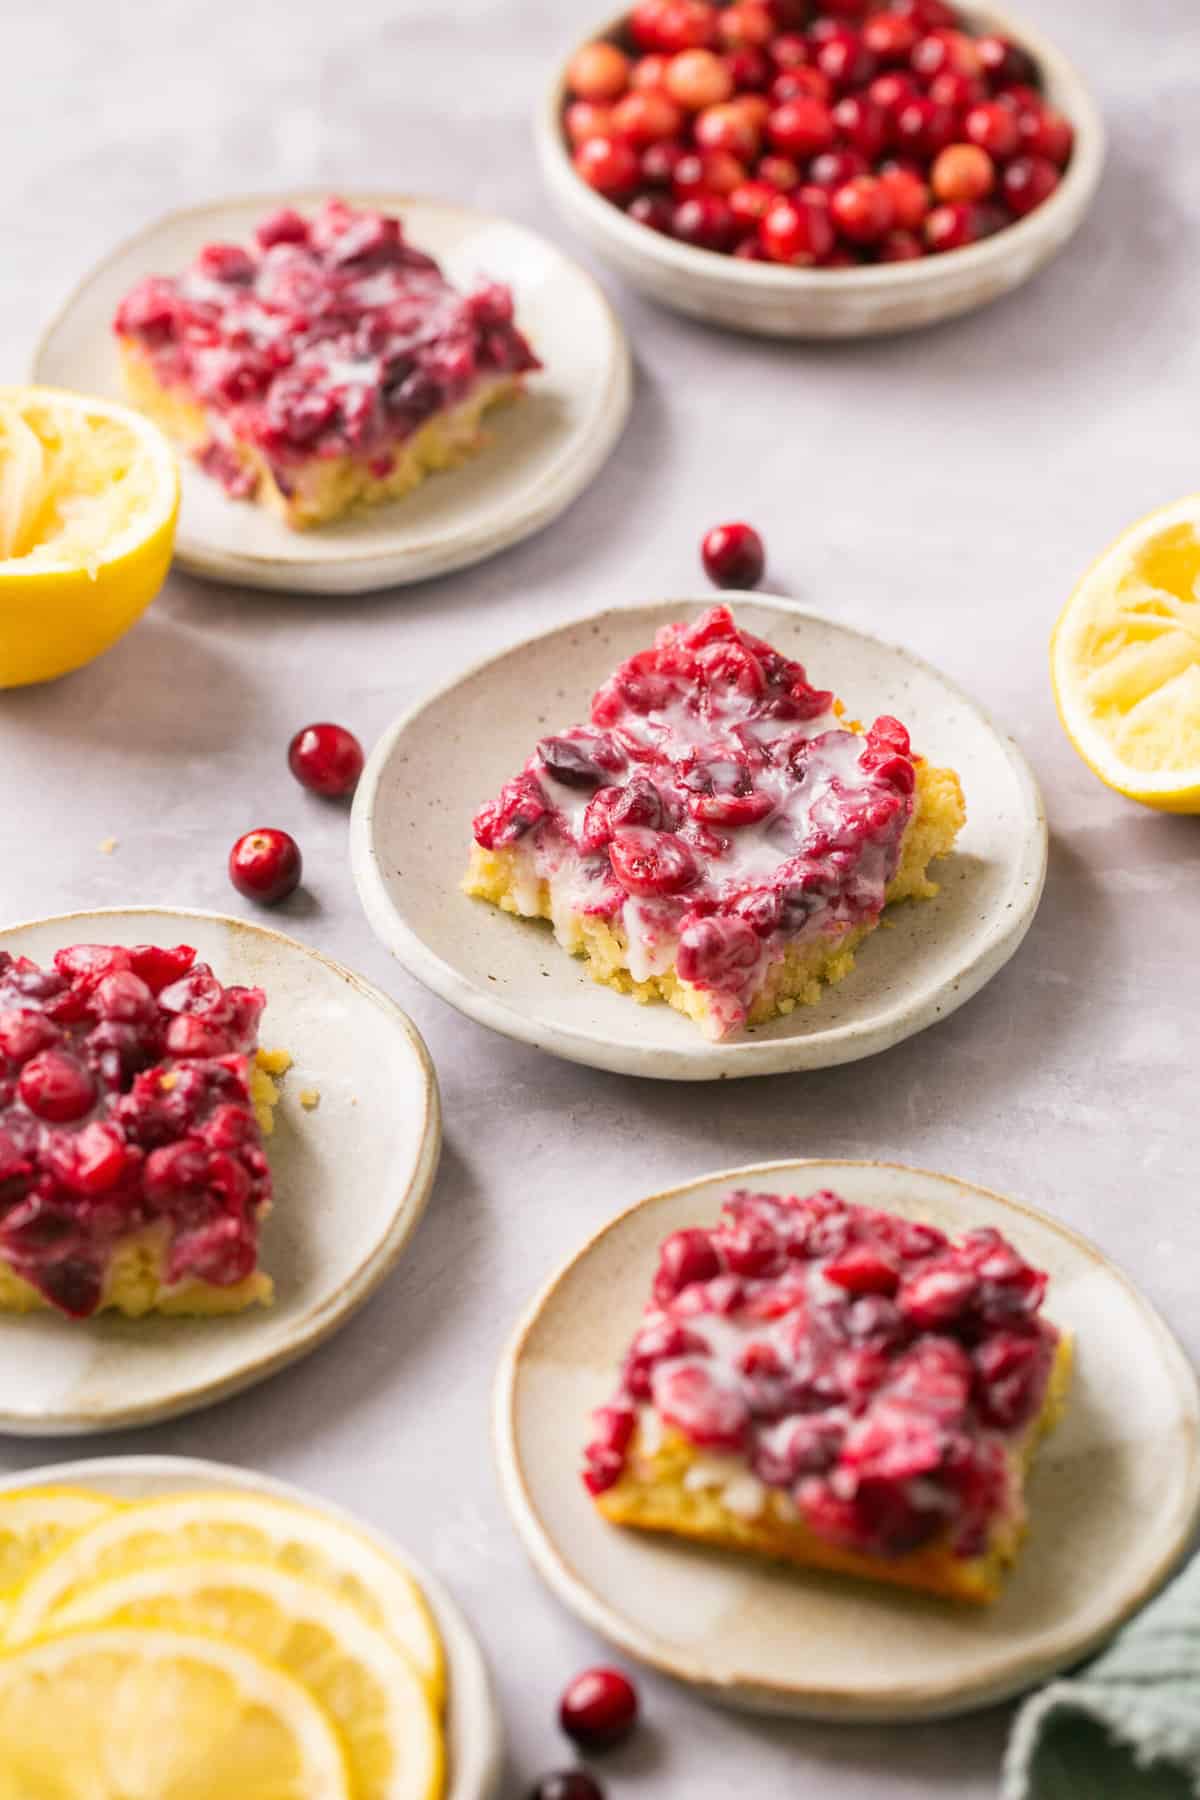 Four serving plates of paleo cranberry lemon bars alongside bowls of cranberries and orange slices.